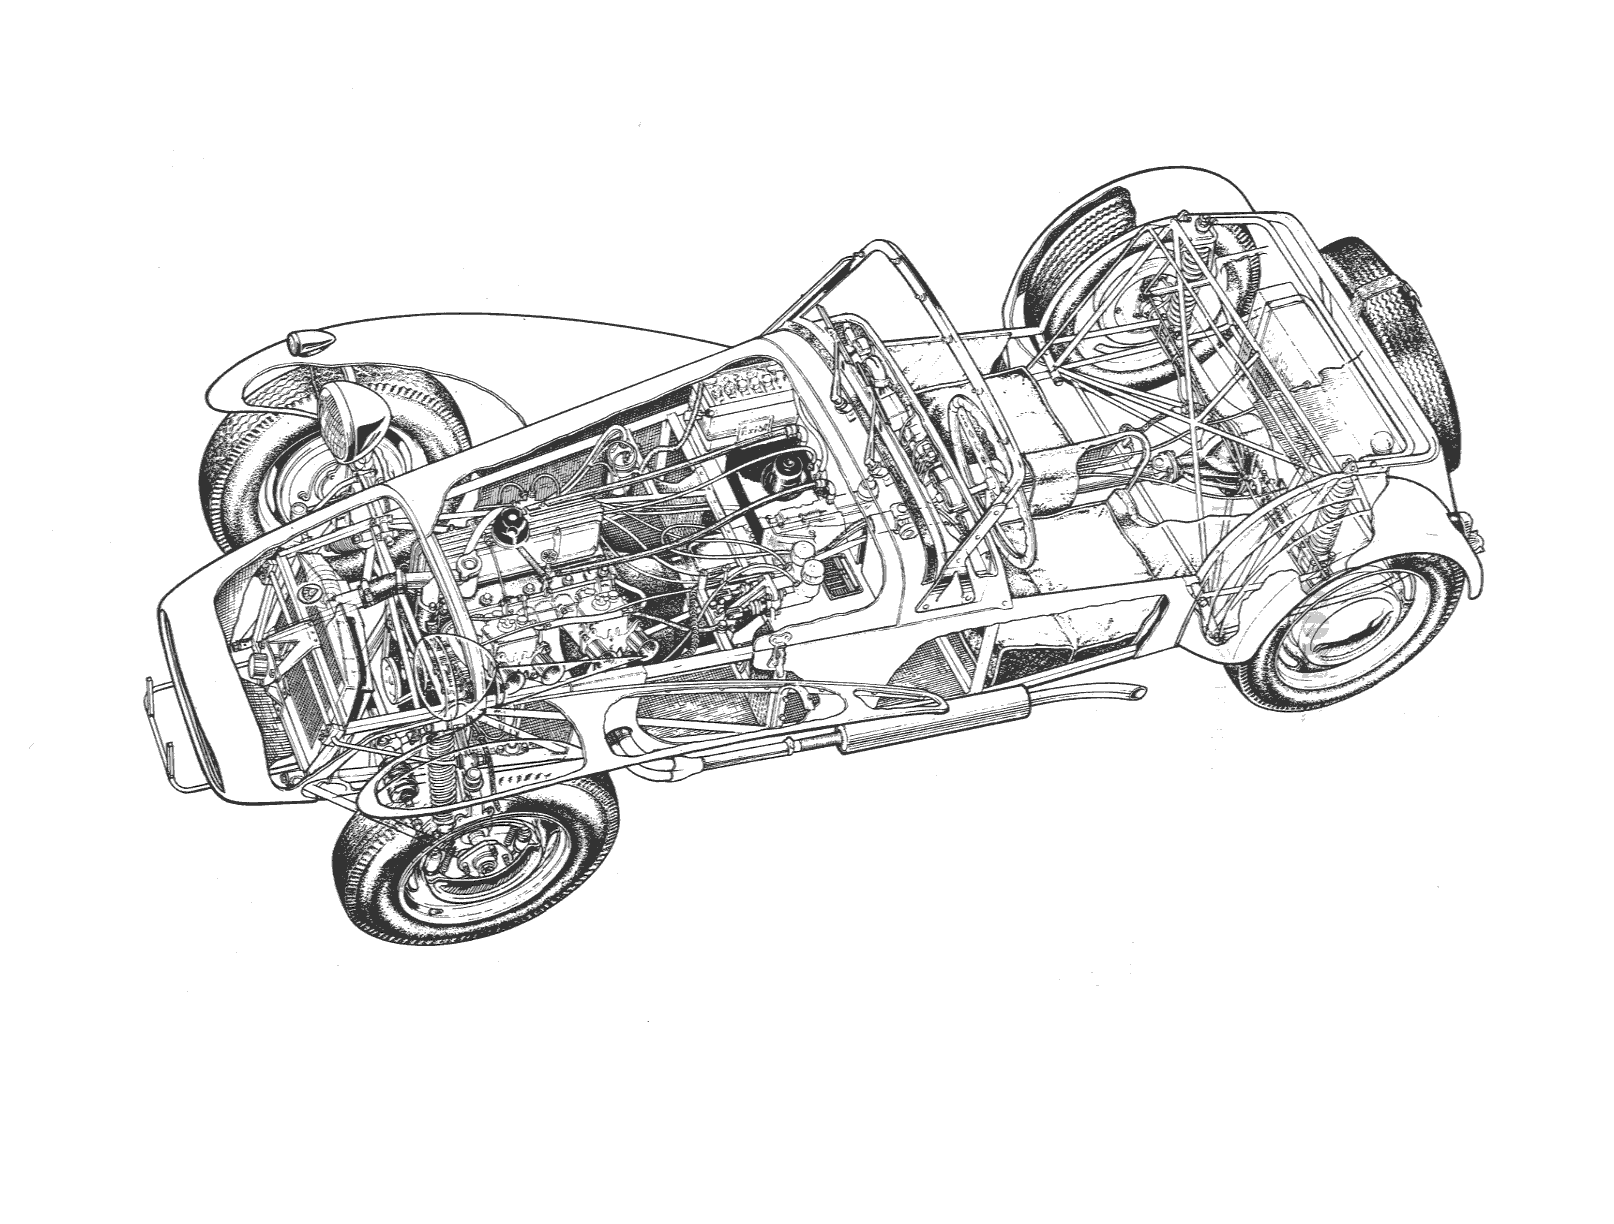 Lotus Seven cutaway